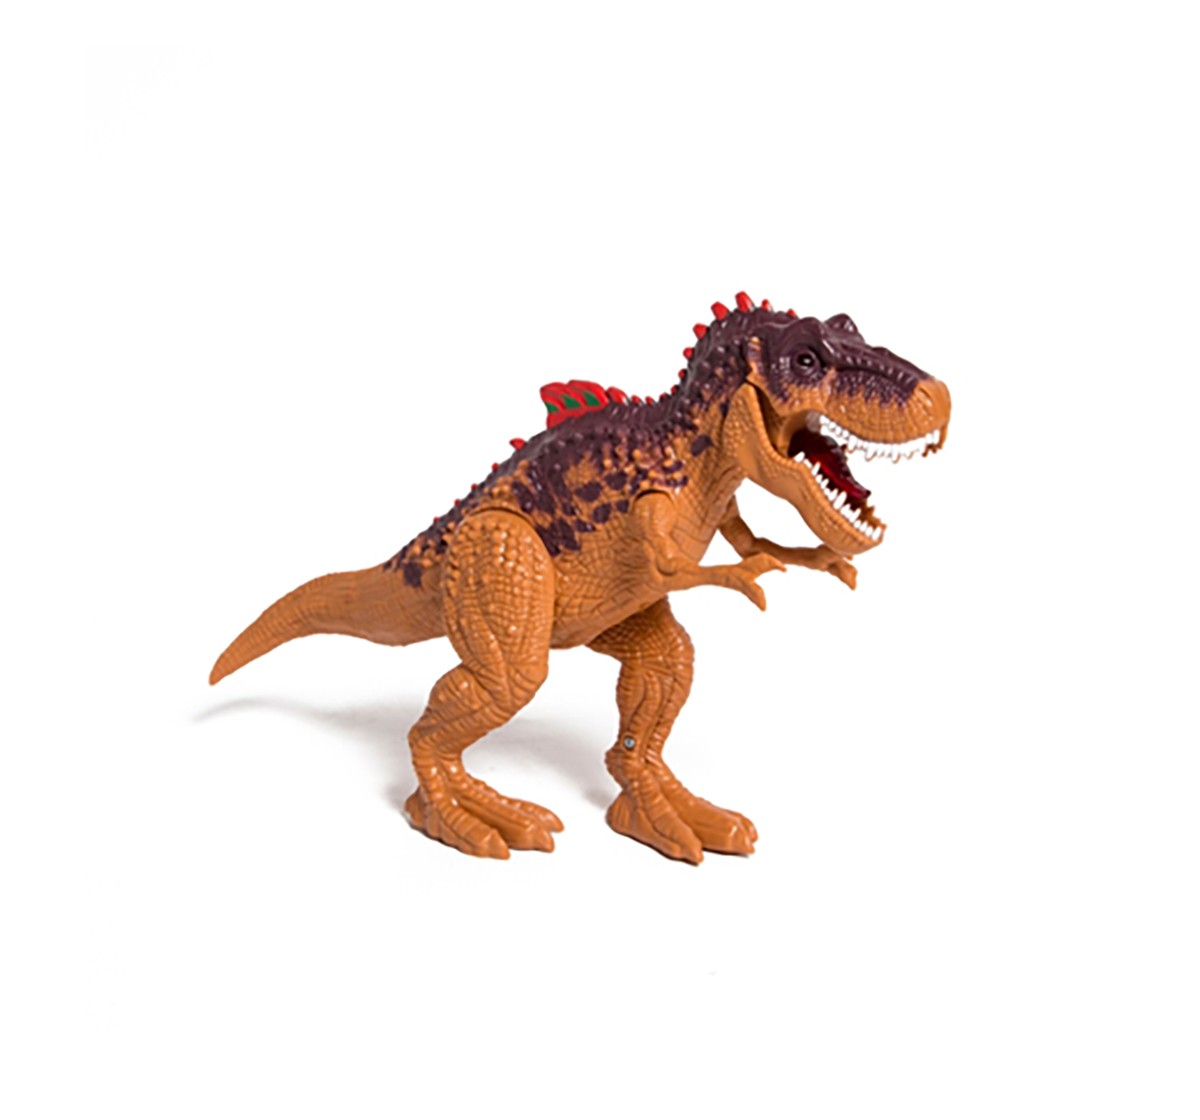  Hamleys Dino Valley Big Dinosaur Action Figure Play Sets for Kids age 3Y+ 